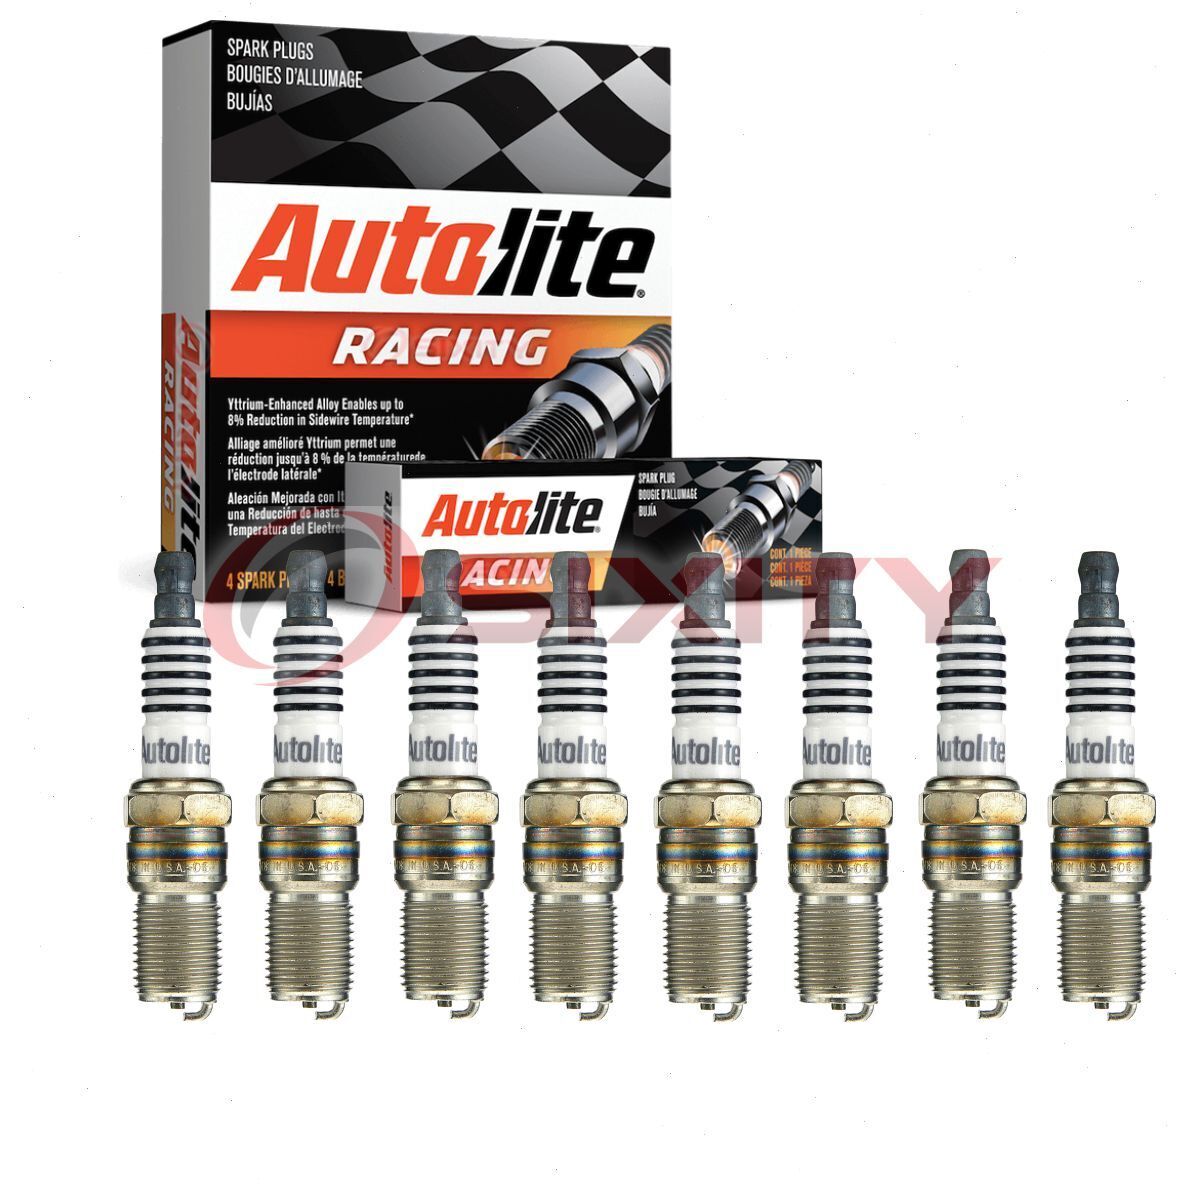 8 pc Autolite Racing AR473 Spark Plugs for AGF071 7891 683 41R04 1085 jv